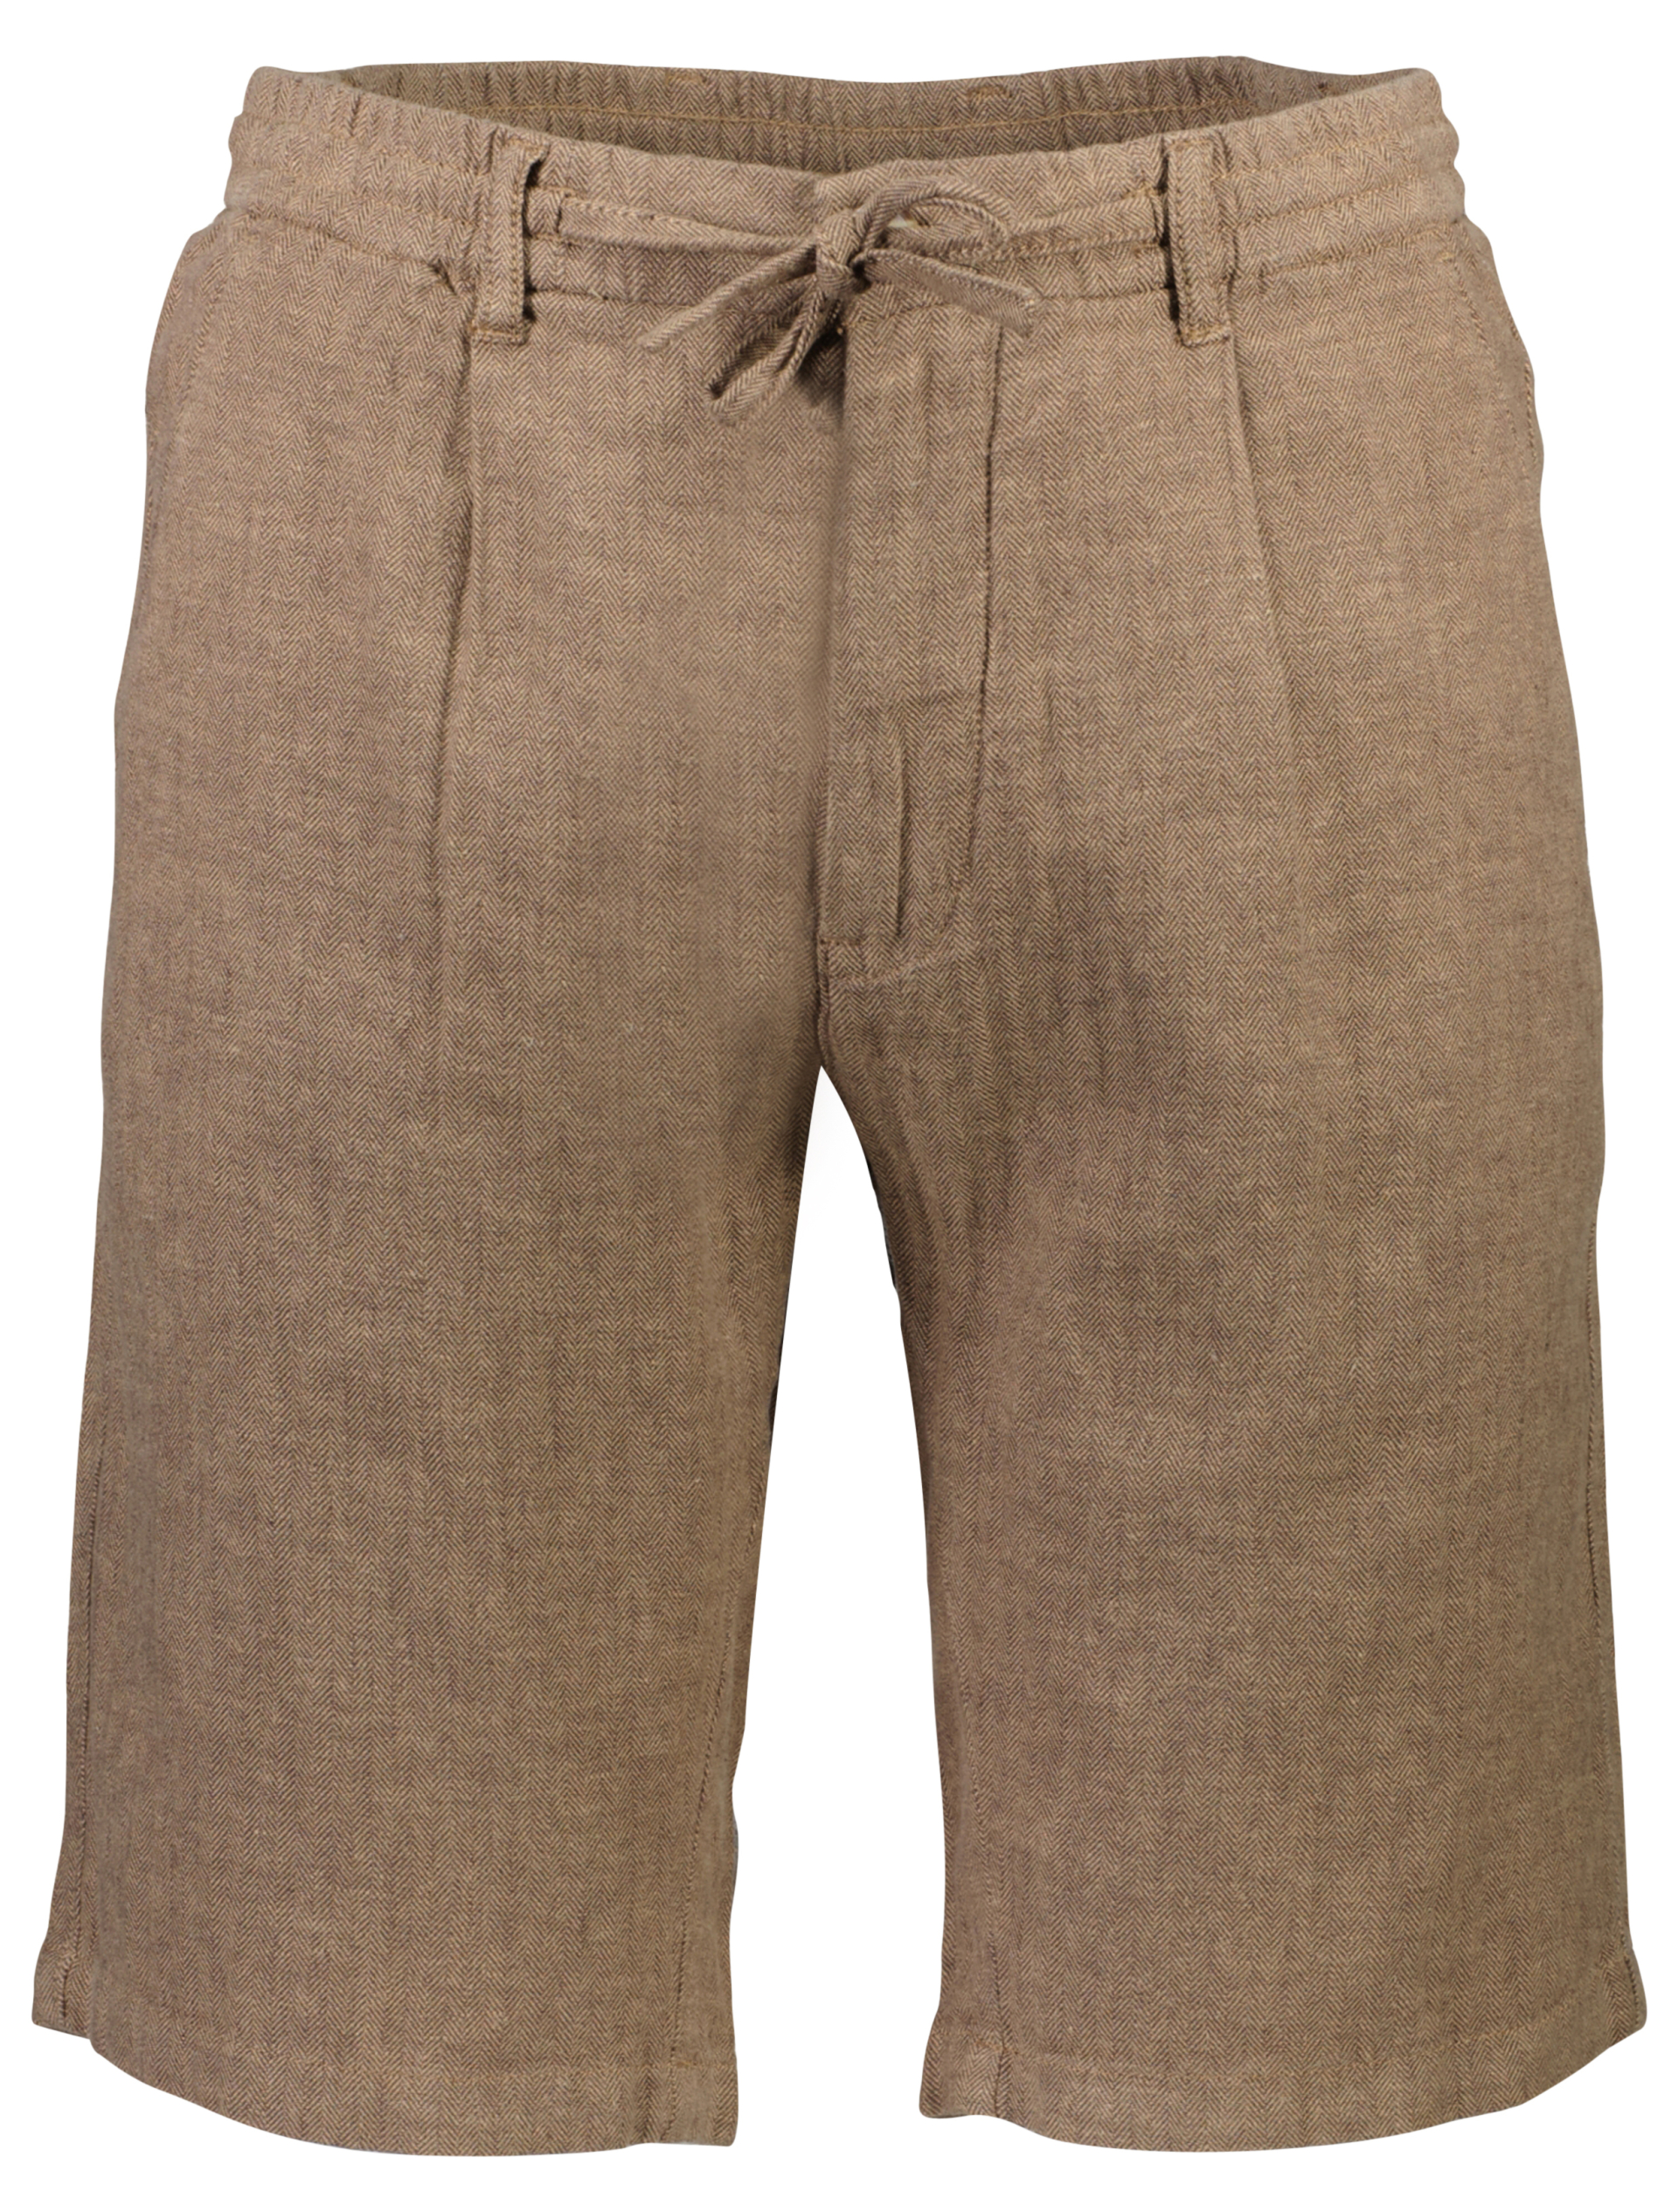 Lindbergh Linen shorts grey / dk stone